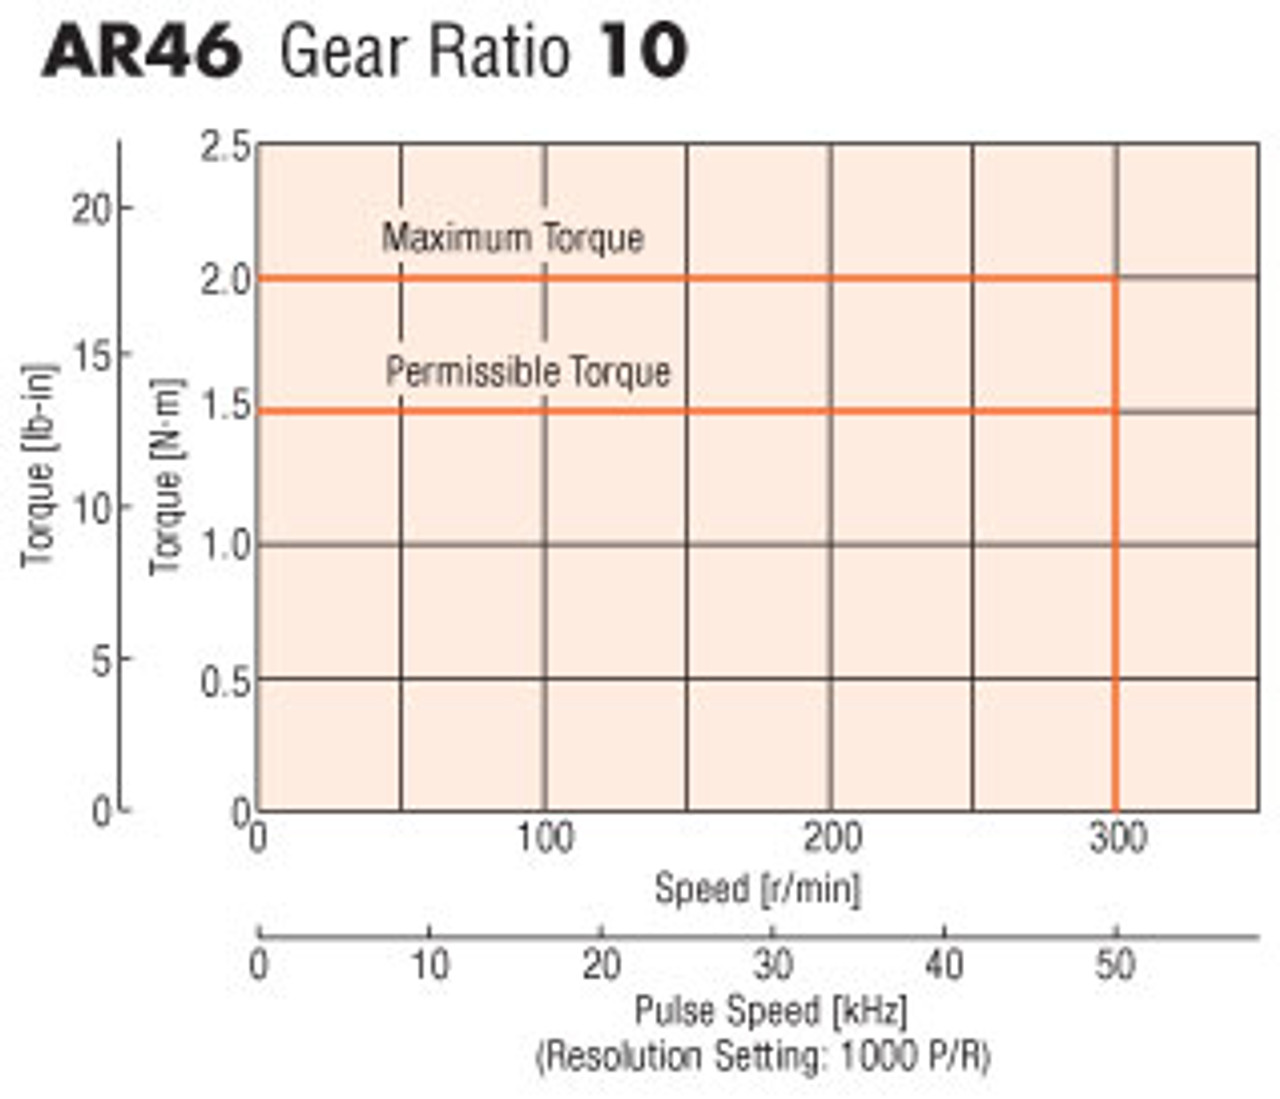 ARM46MC-PS10 - Speed-Torque